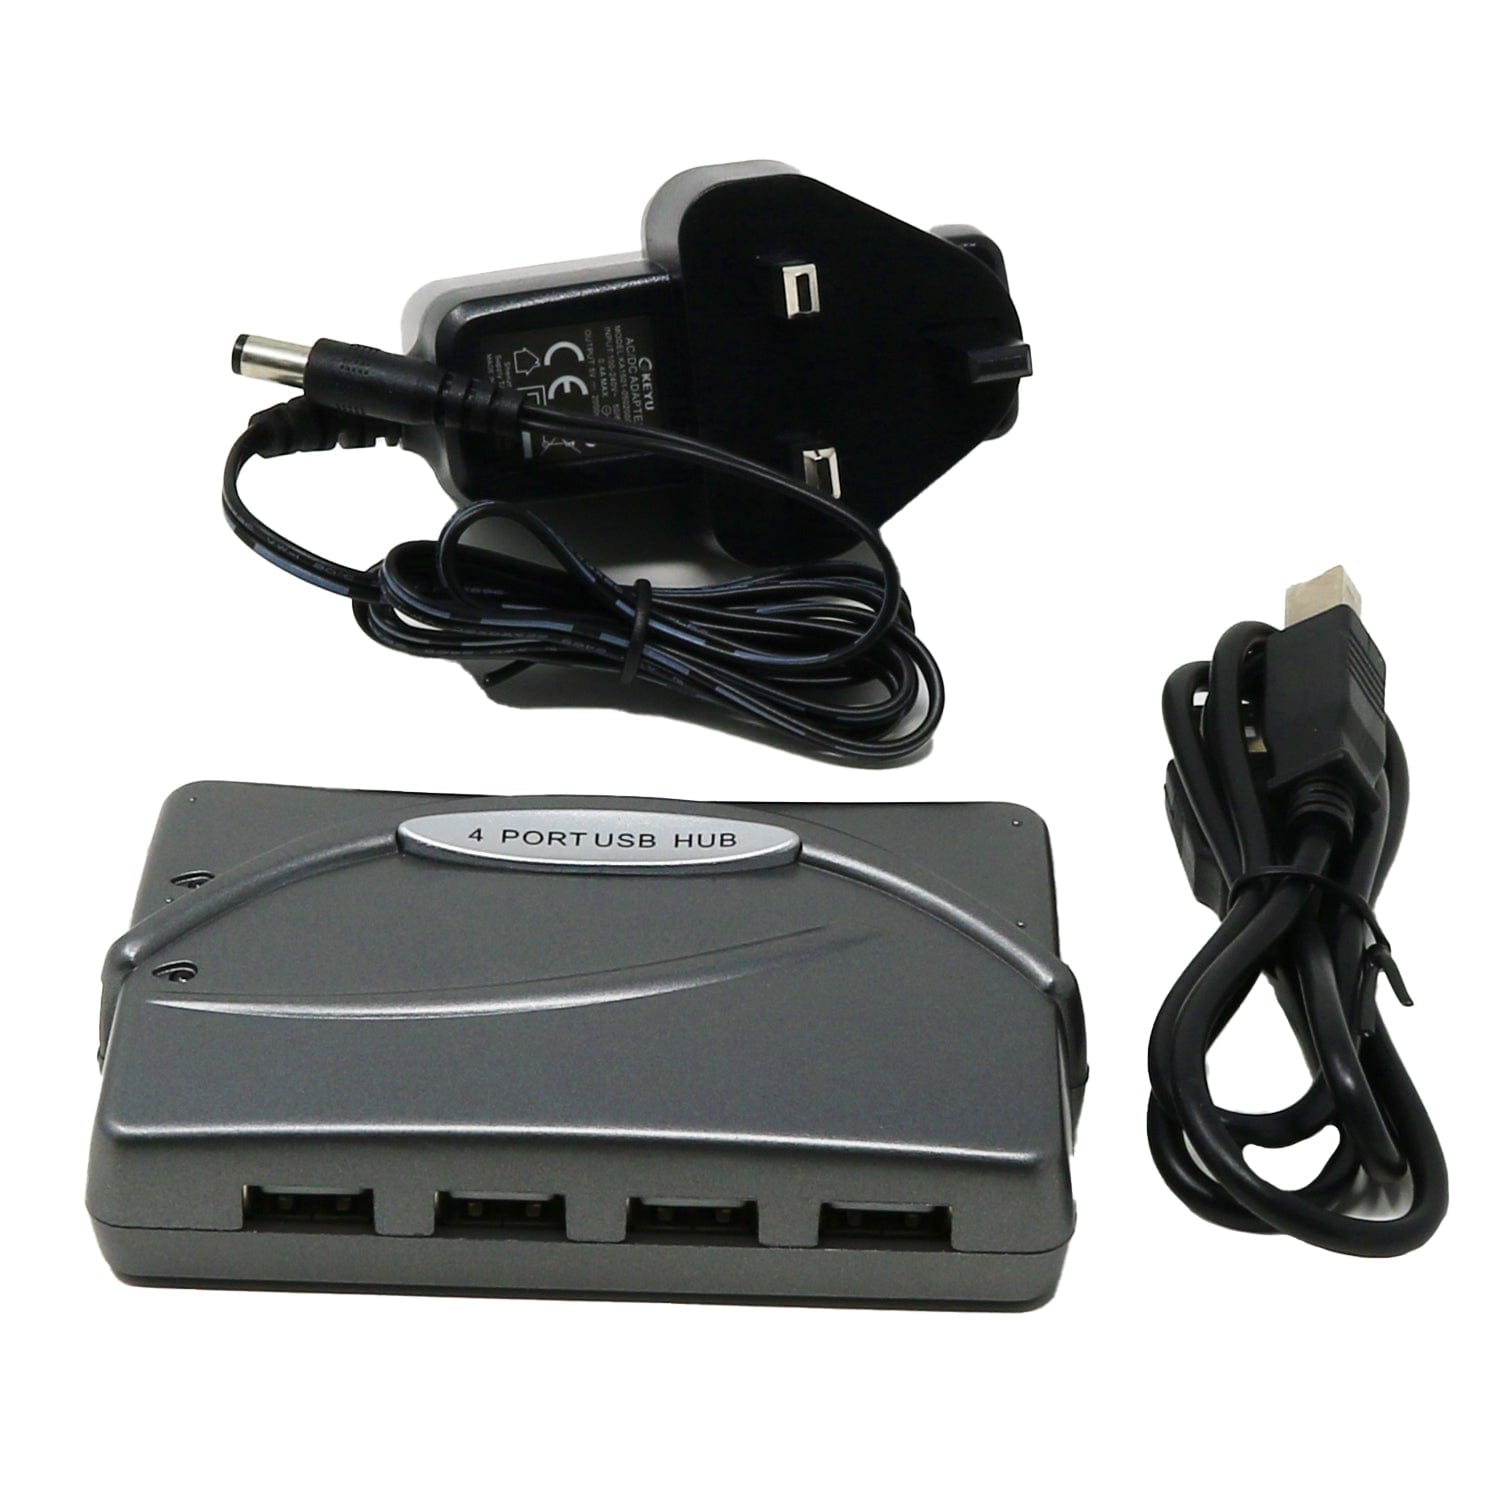 NewLink 4 Port USB Hub - UK 5V 2A - The Pi Hut